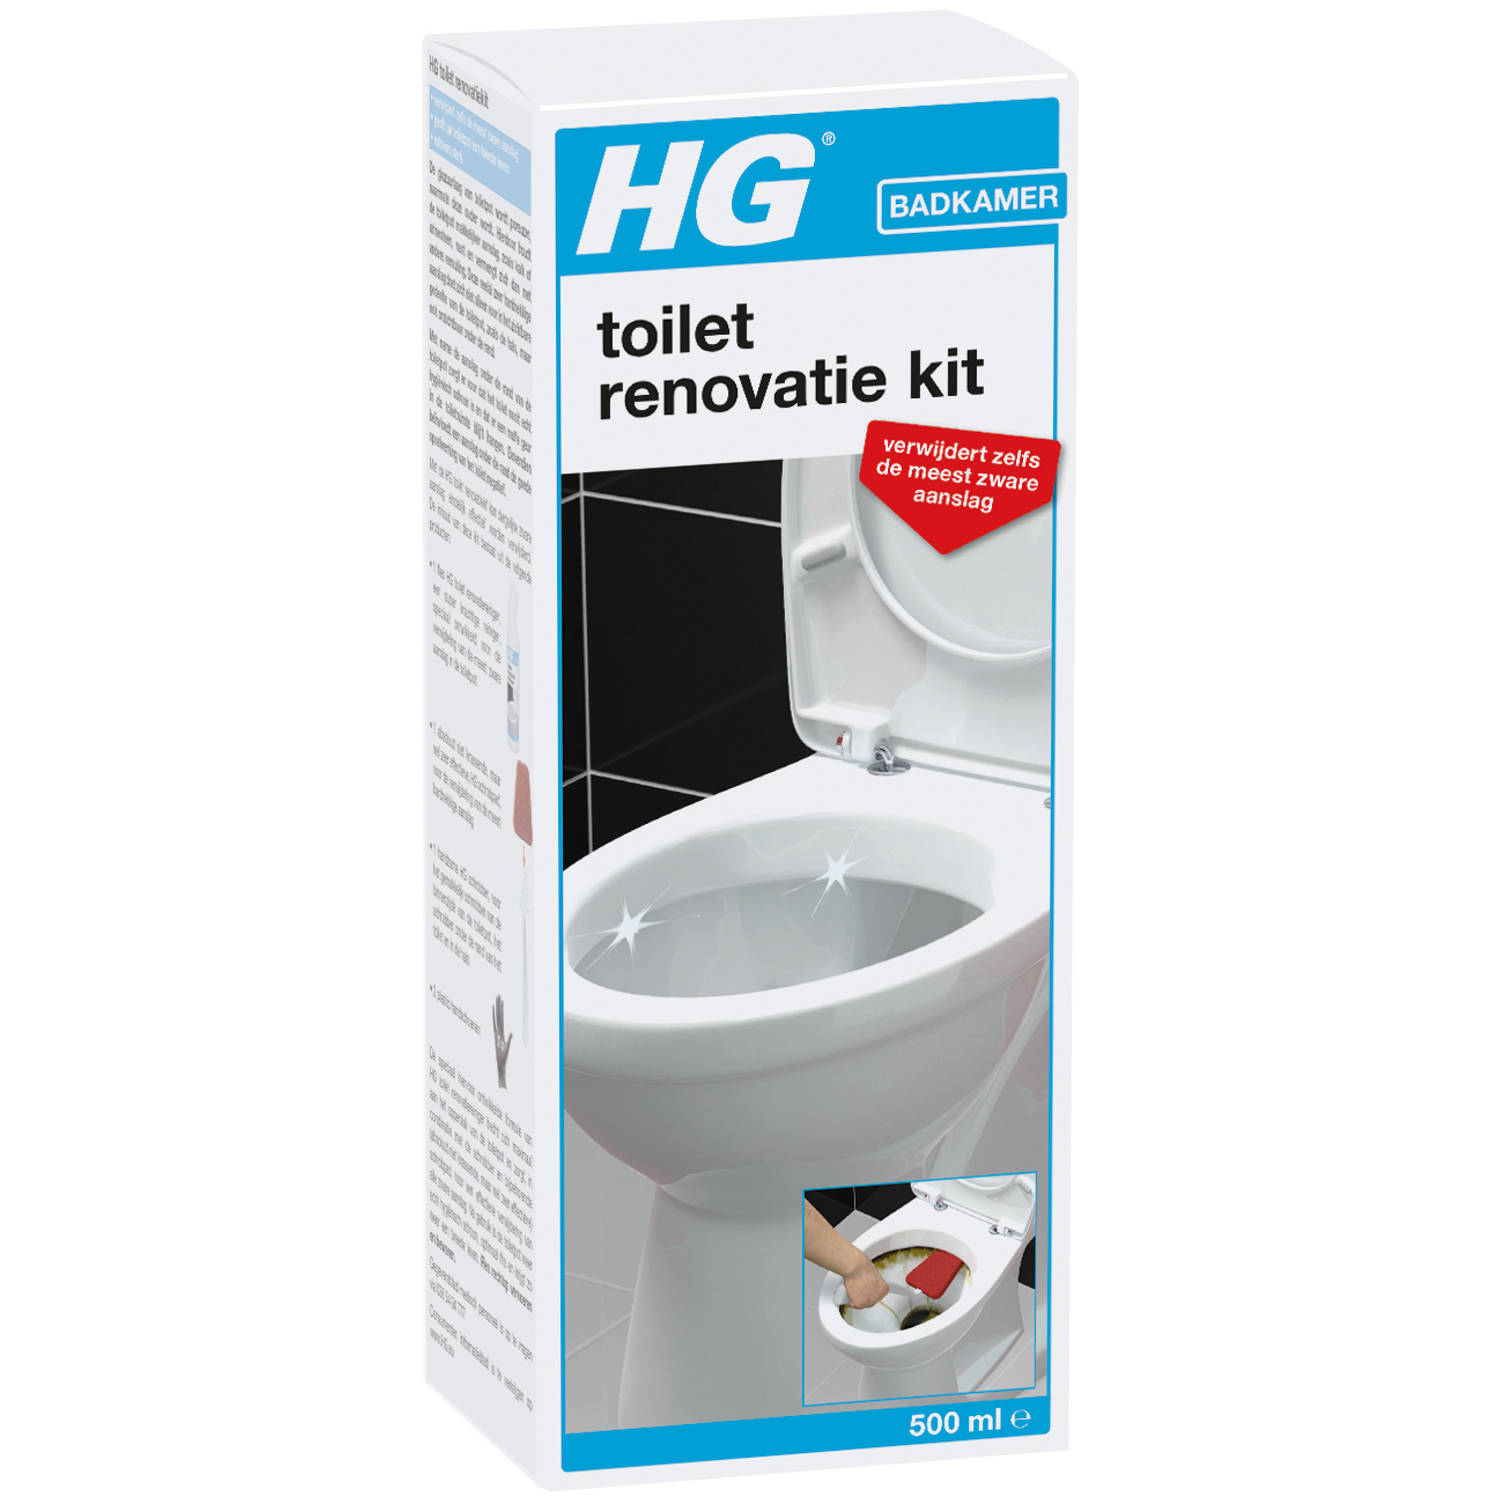 Toilet renovatie reiniger kit - HG